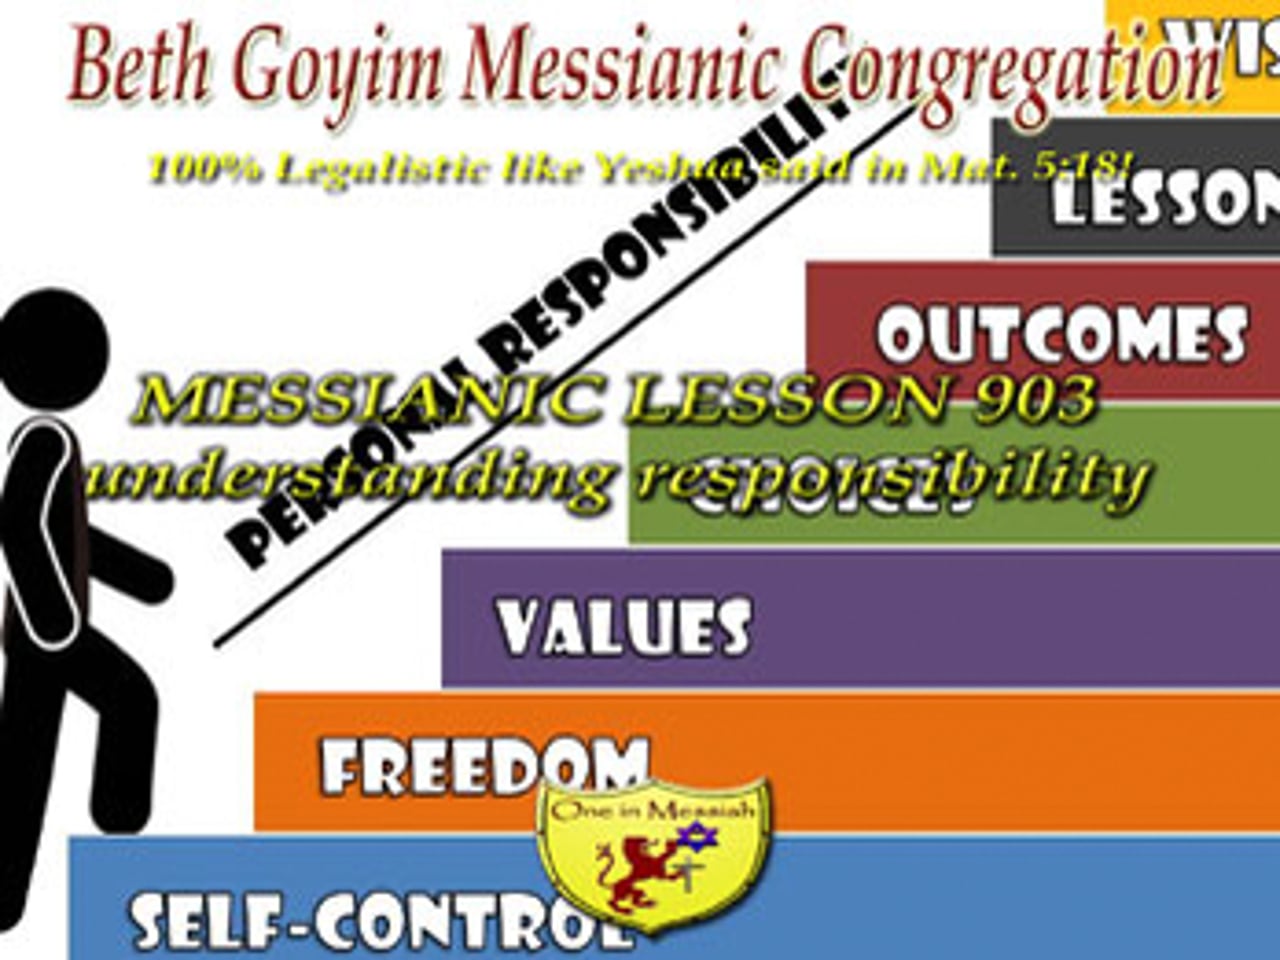 BGMCTV MESSIANIC LESSON 903 UNDERSTANDING RESPONSIBILITY